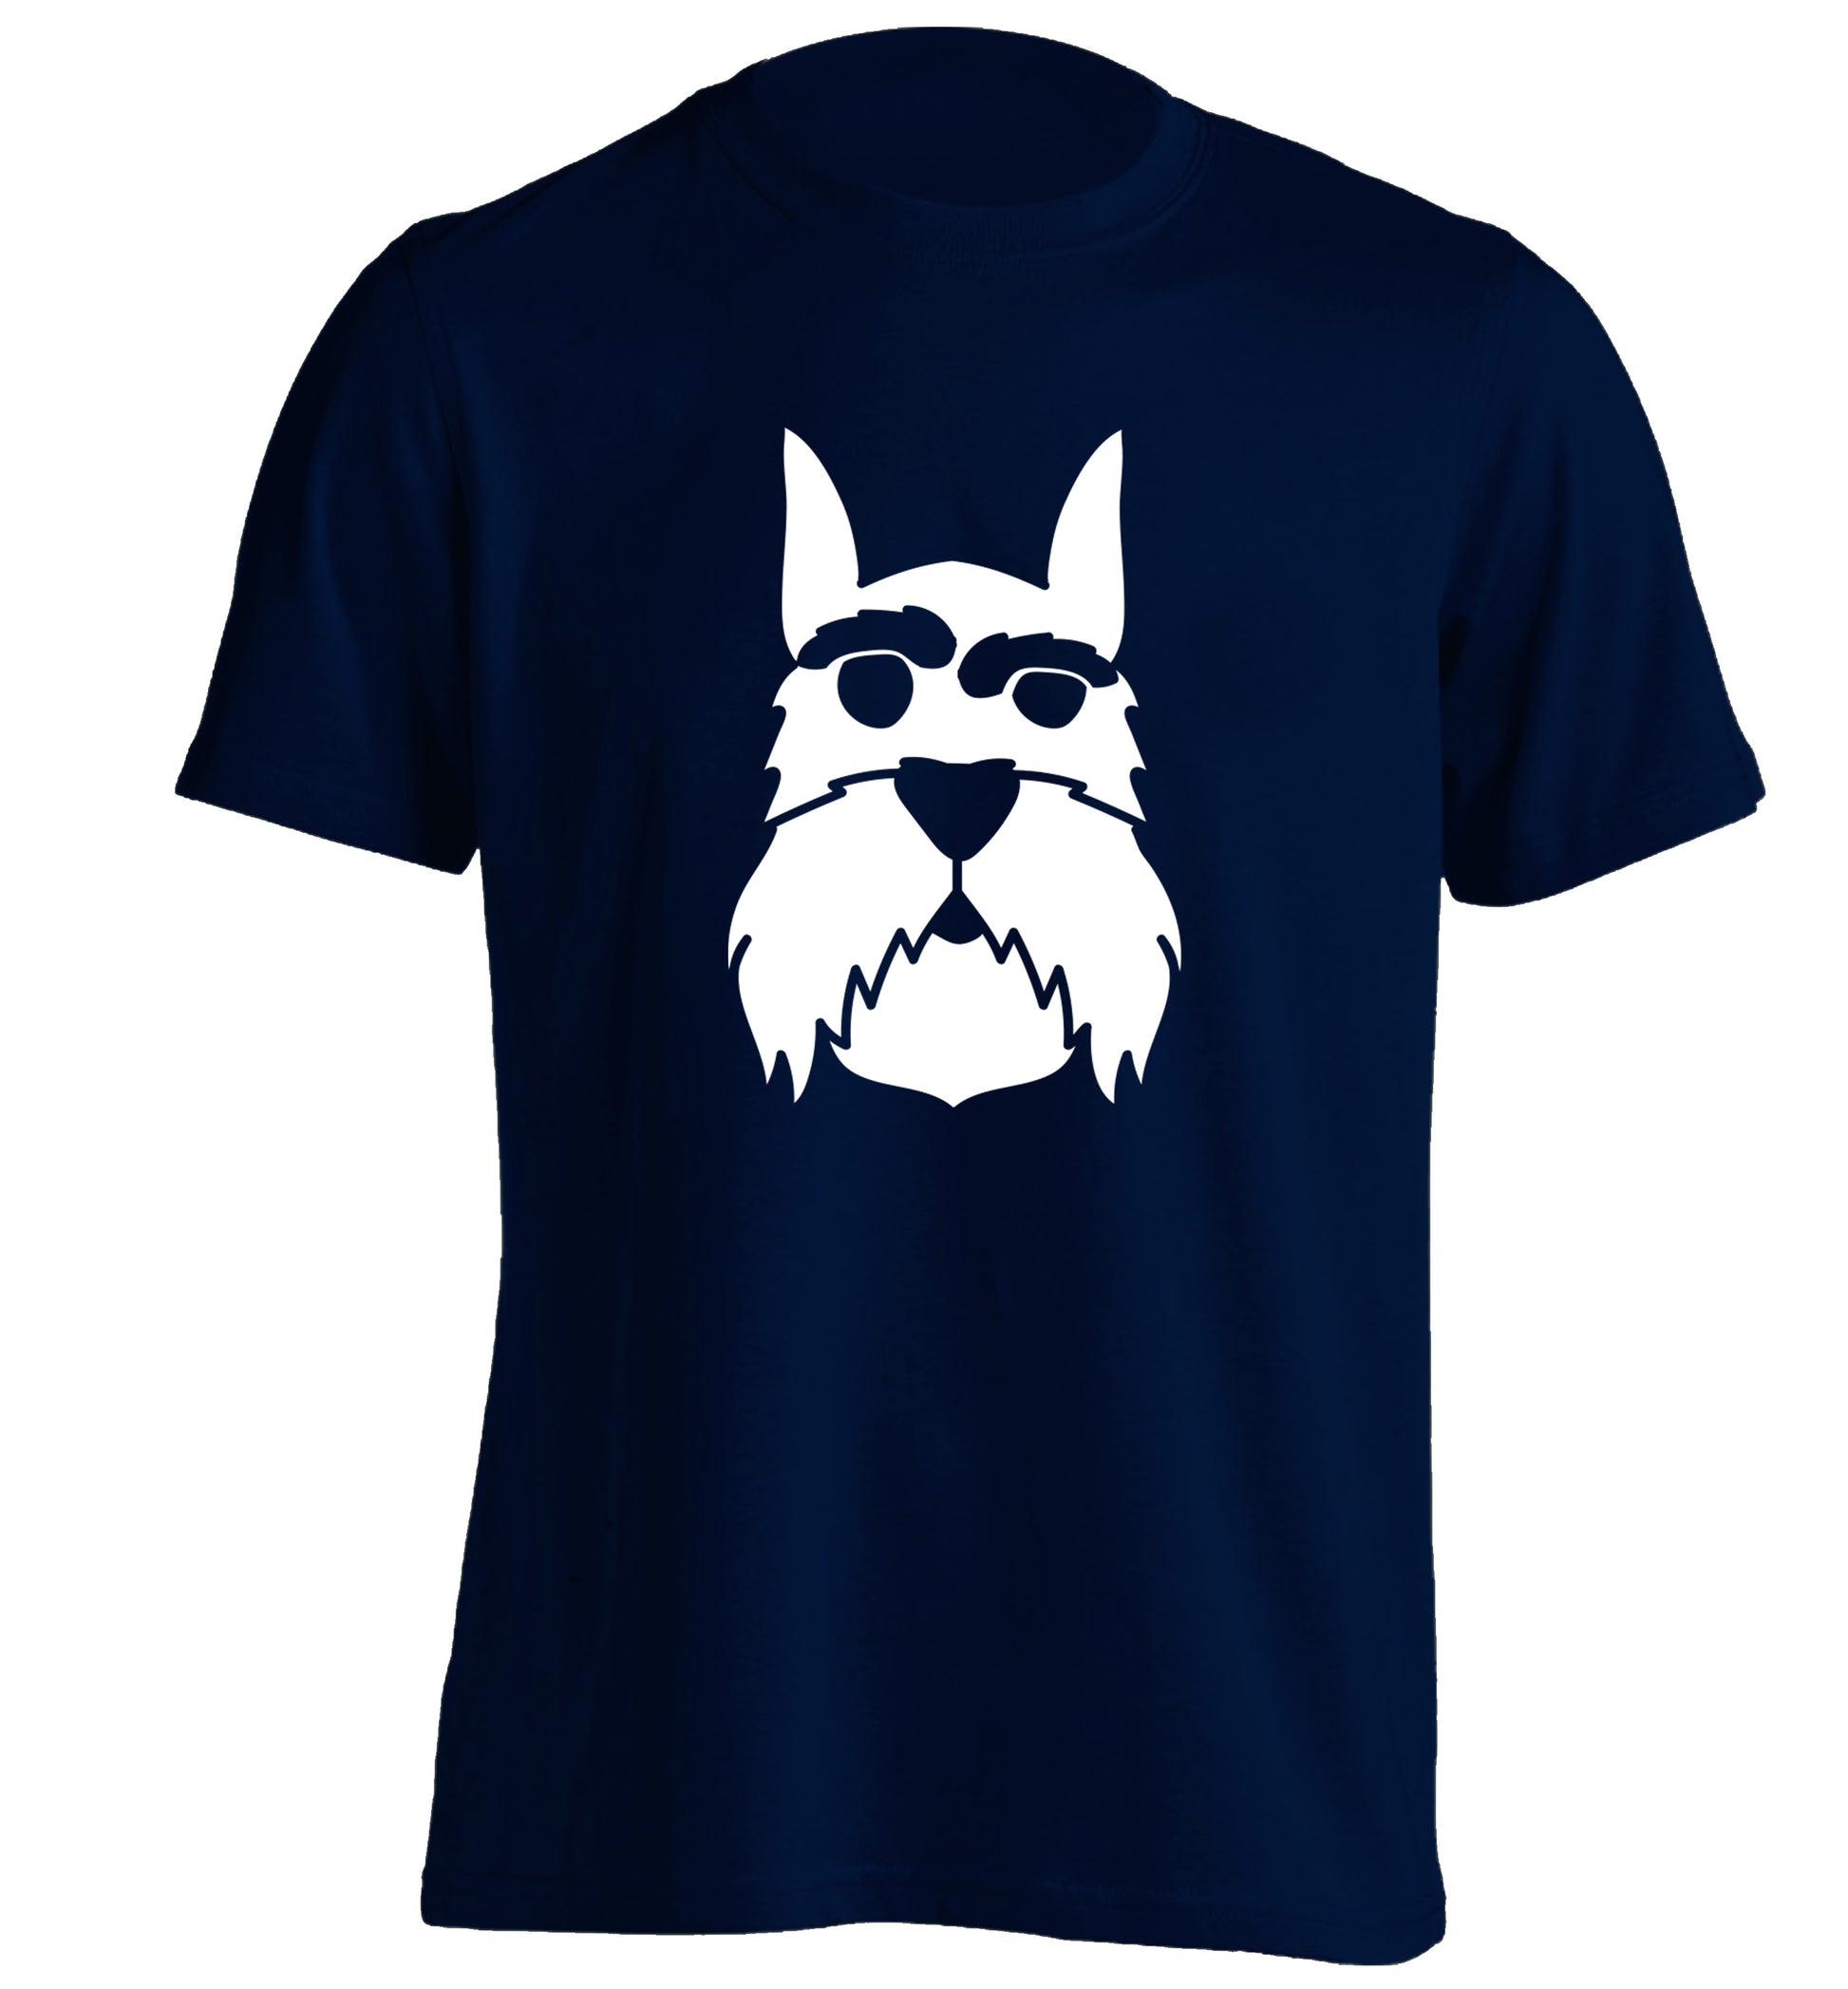 Schnauzer dog illustration adults unisex navy Tshirt 2XL